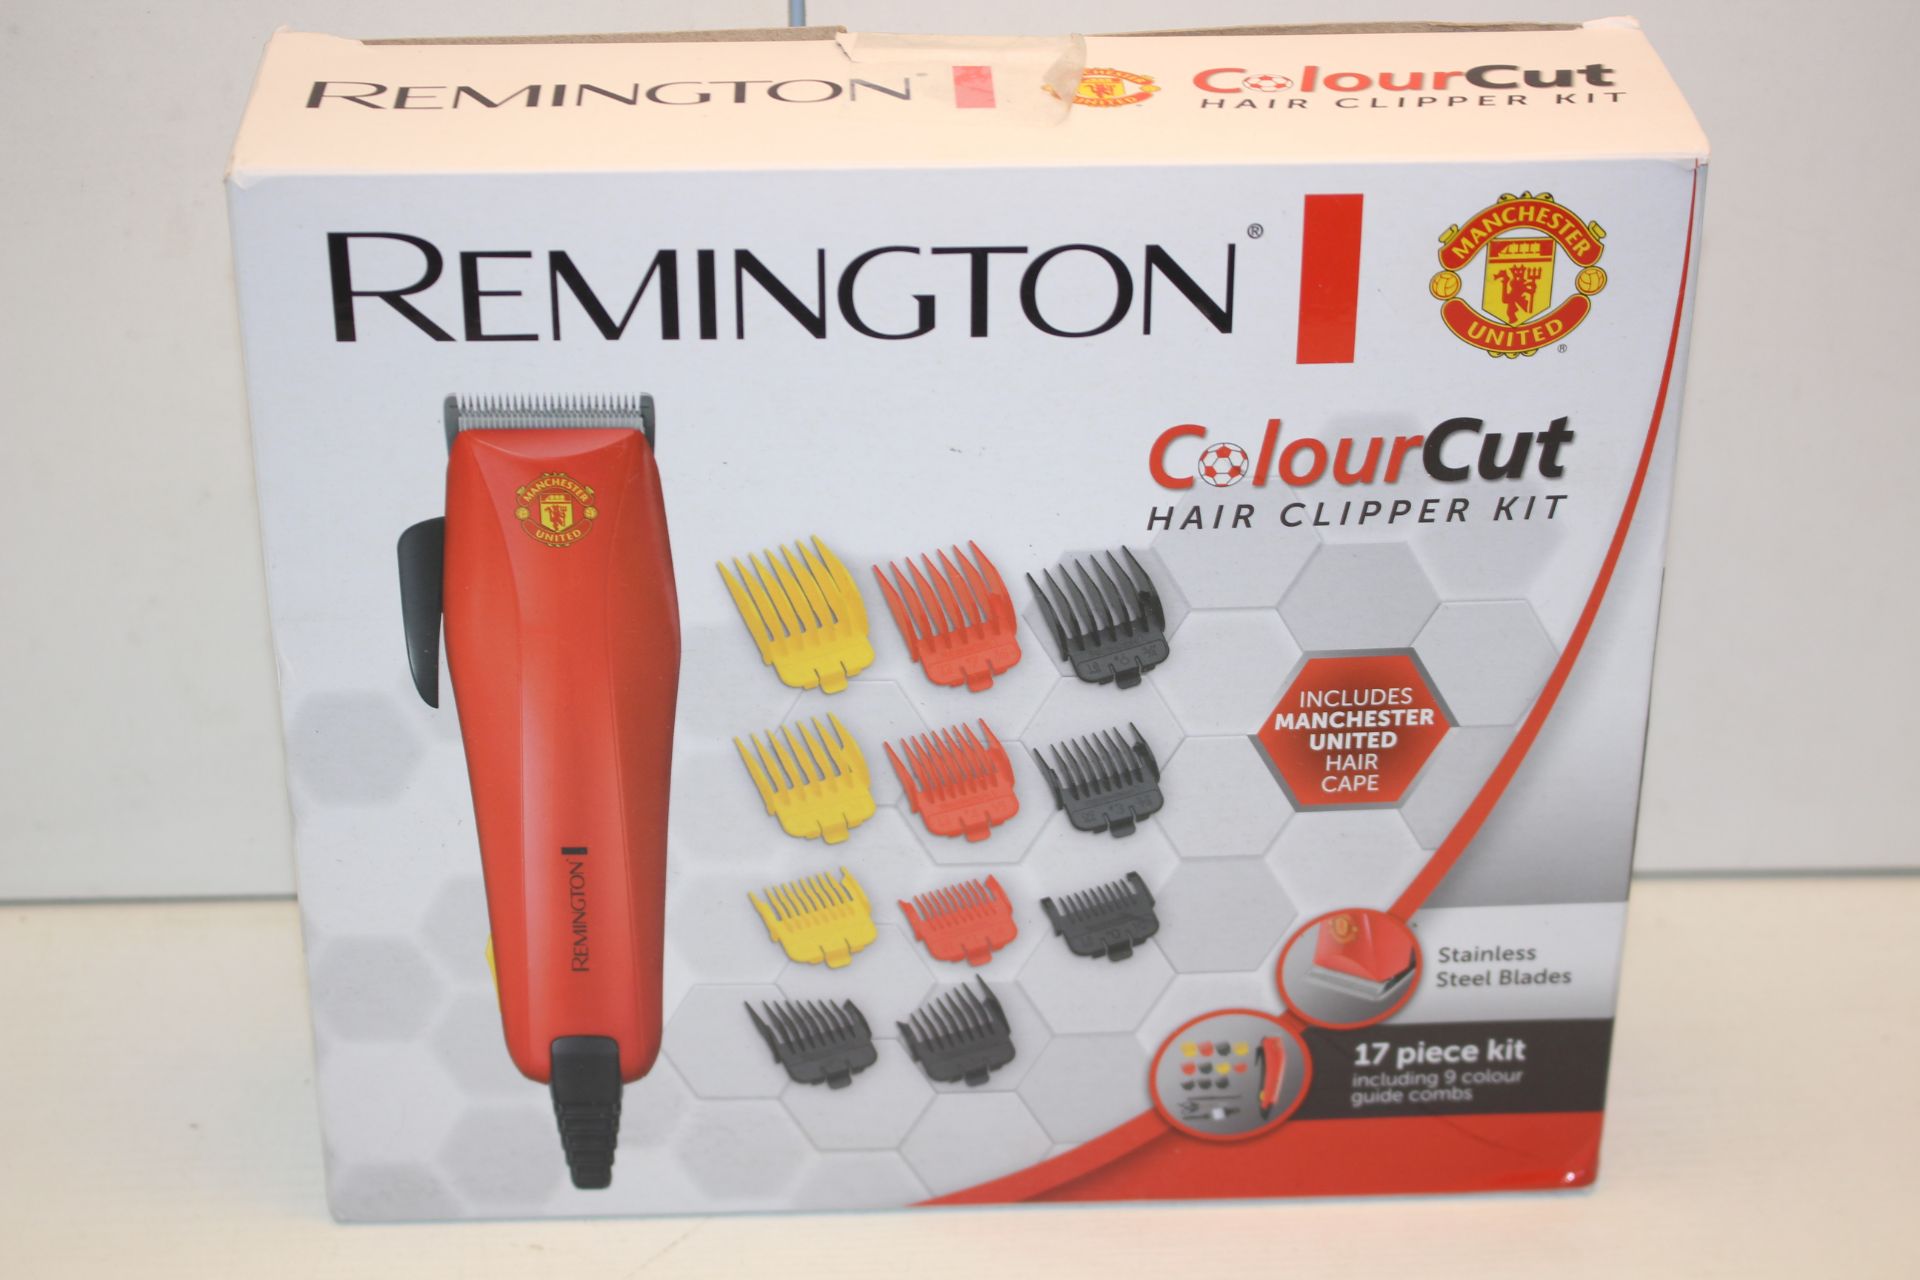 BOXED REMINGTON COLOURCUT HAIR CLIPPER KIT MAN UTD EDITION RRP £39.99Condition ReportAppraisal